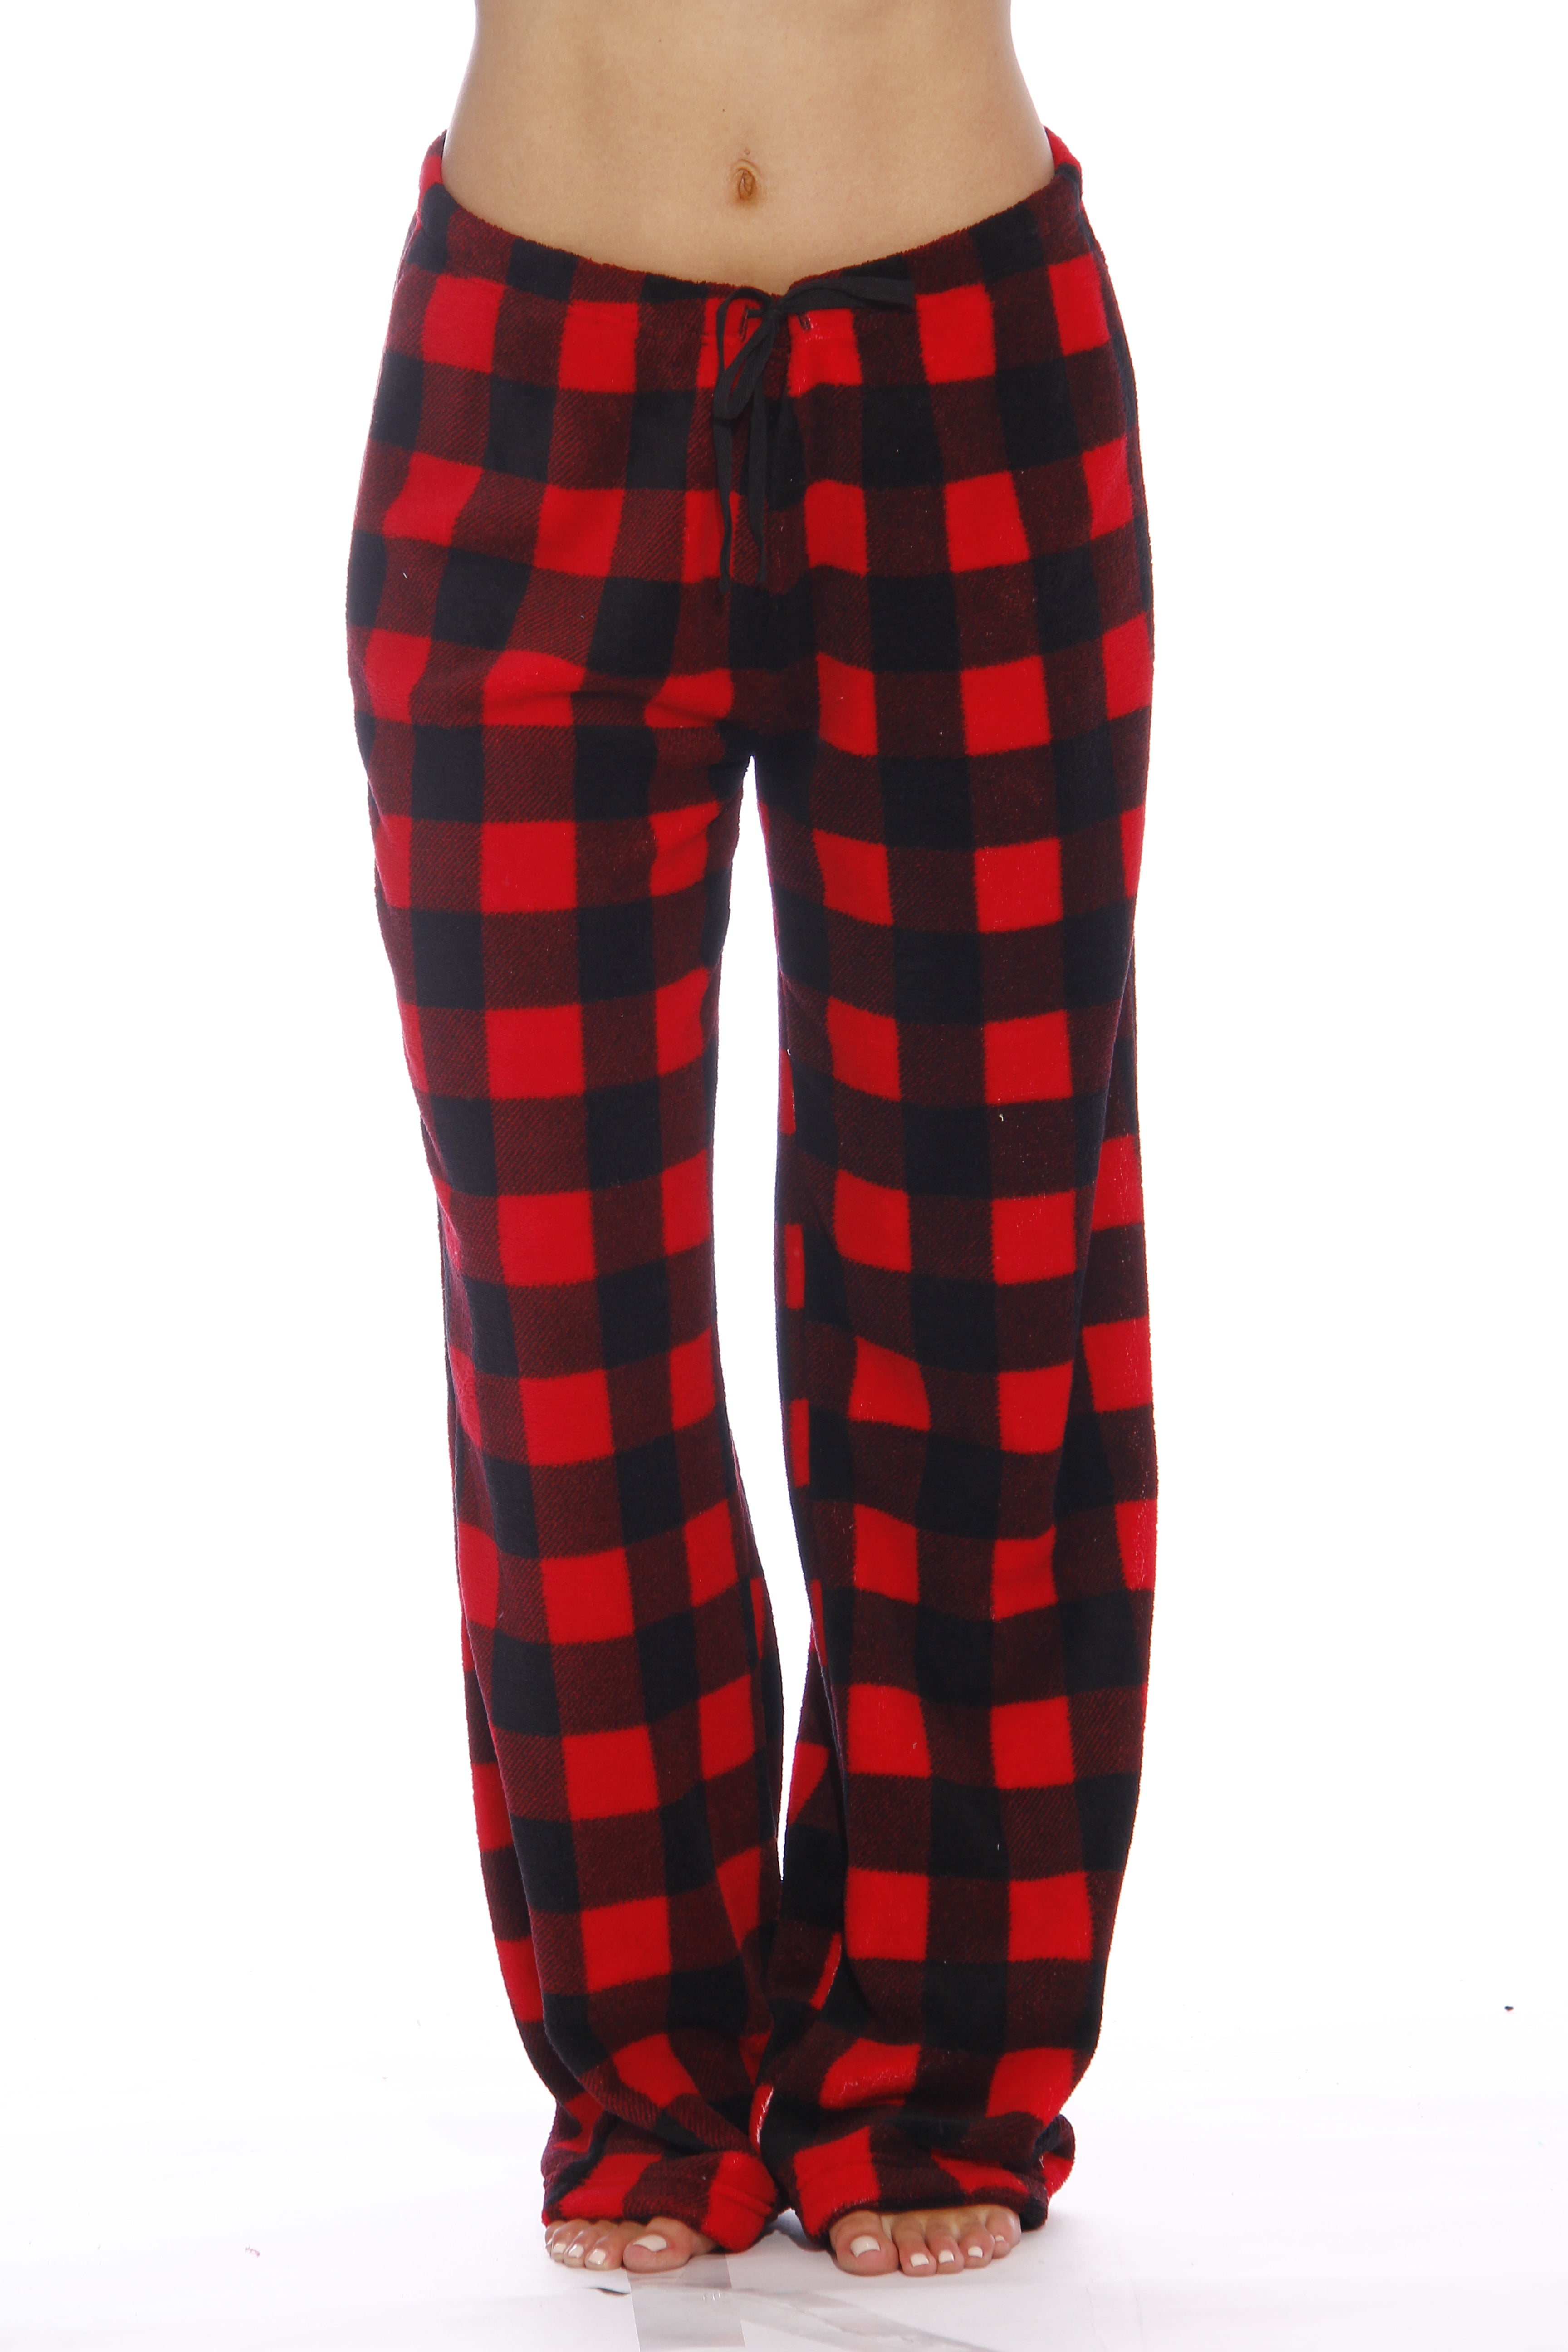 Buffalo Plaid Super Soft Pajama Pants - Buffalo Plaid